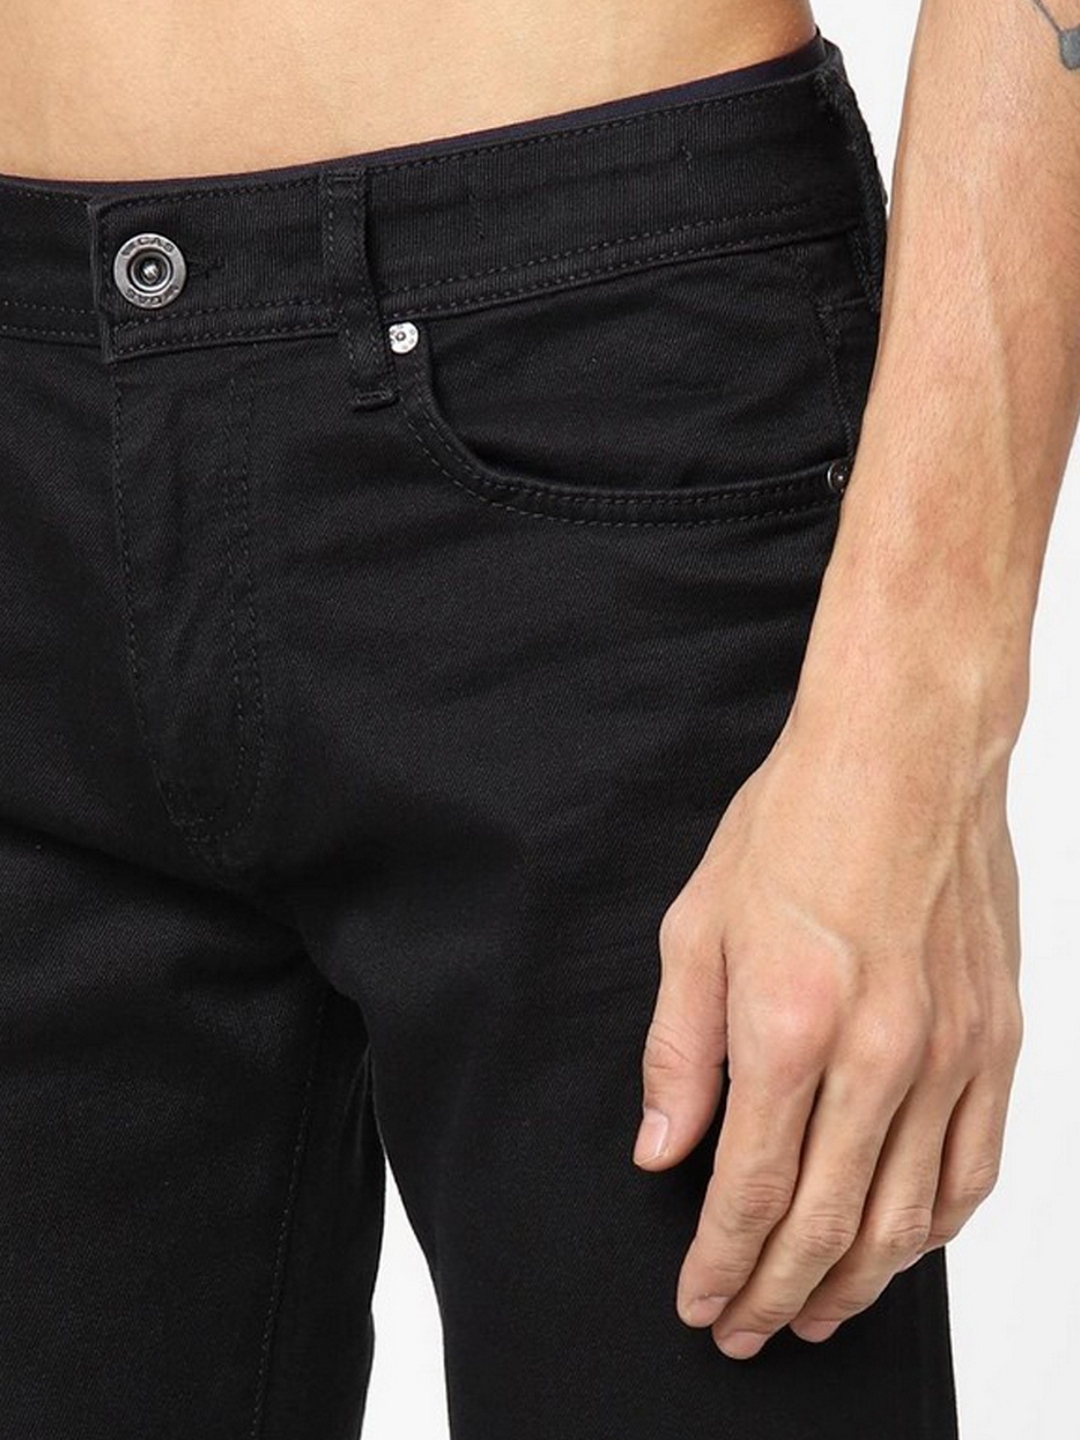 Men's Sax Zip Skinny Fit BLACK Jeans